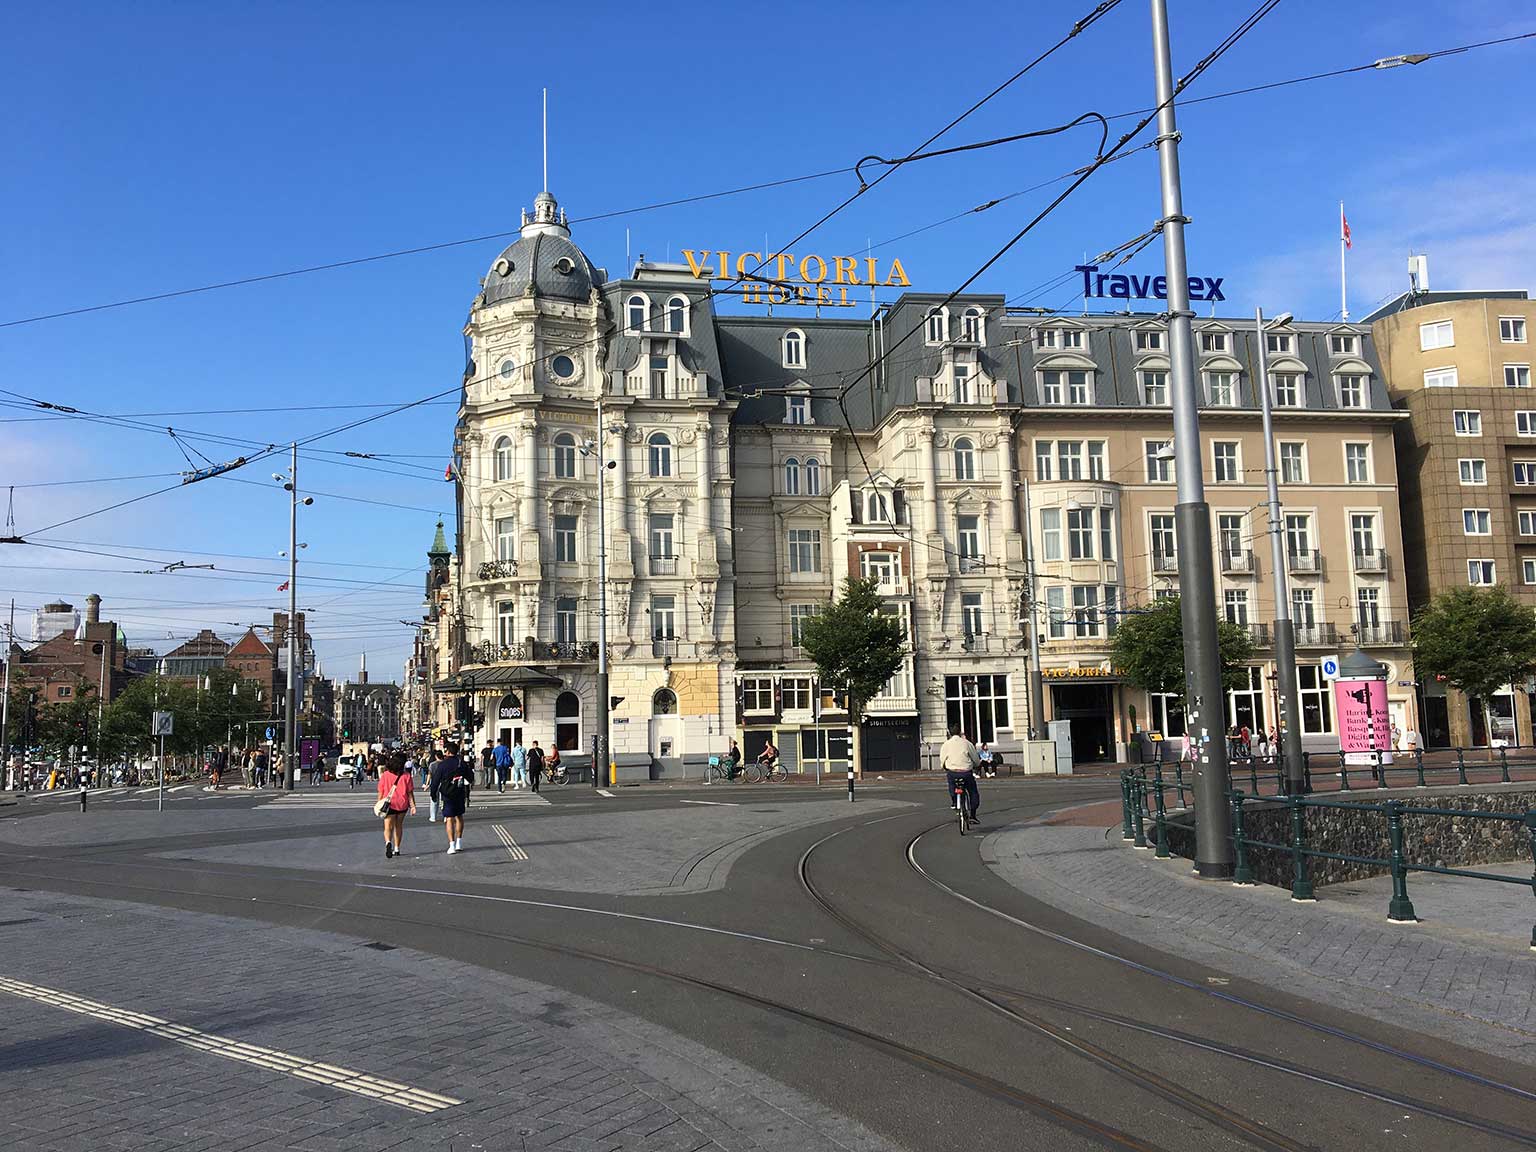 Damrak, Amsterdam, viewed from Stationsplein with Victoria Hotel on the corner